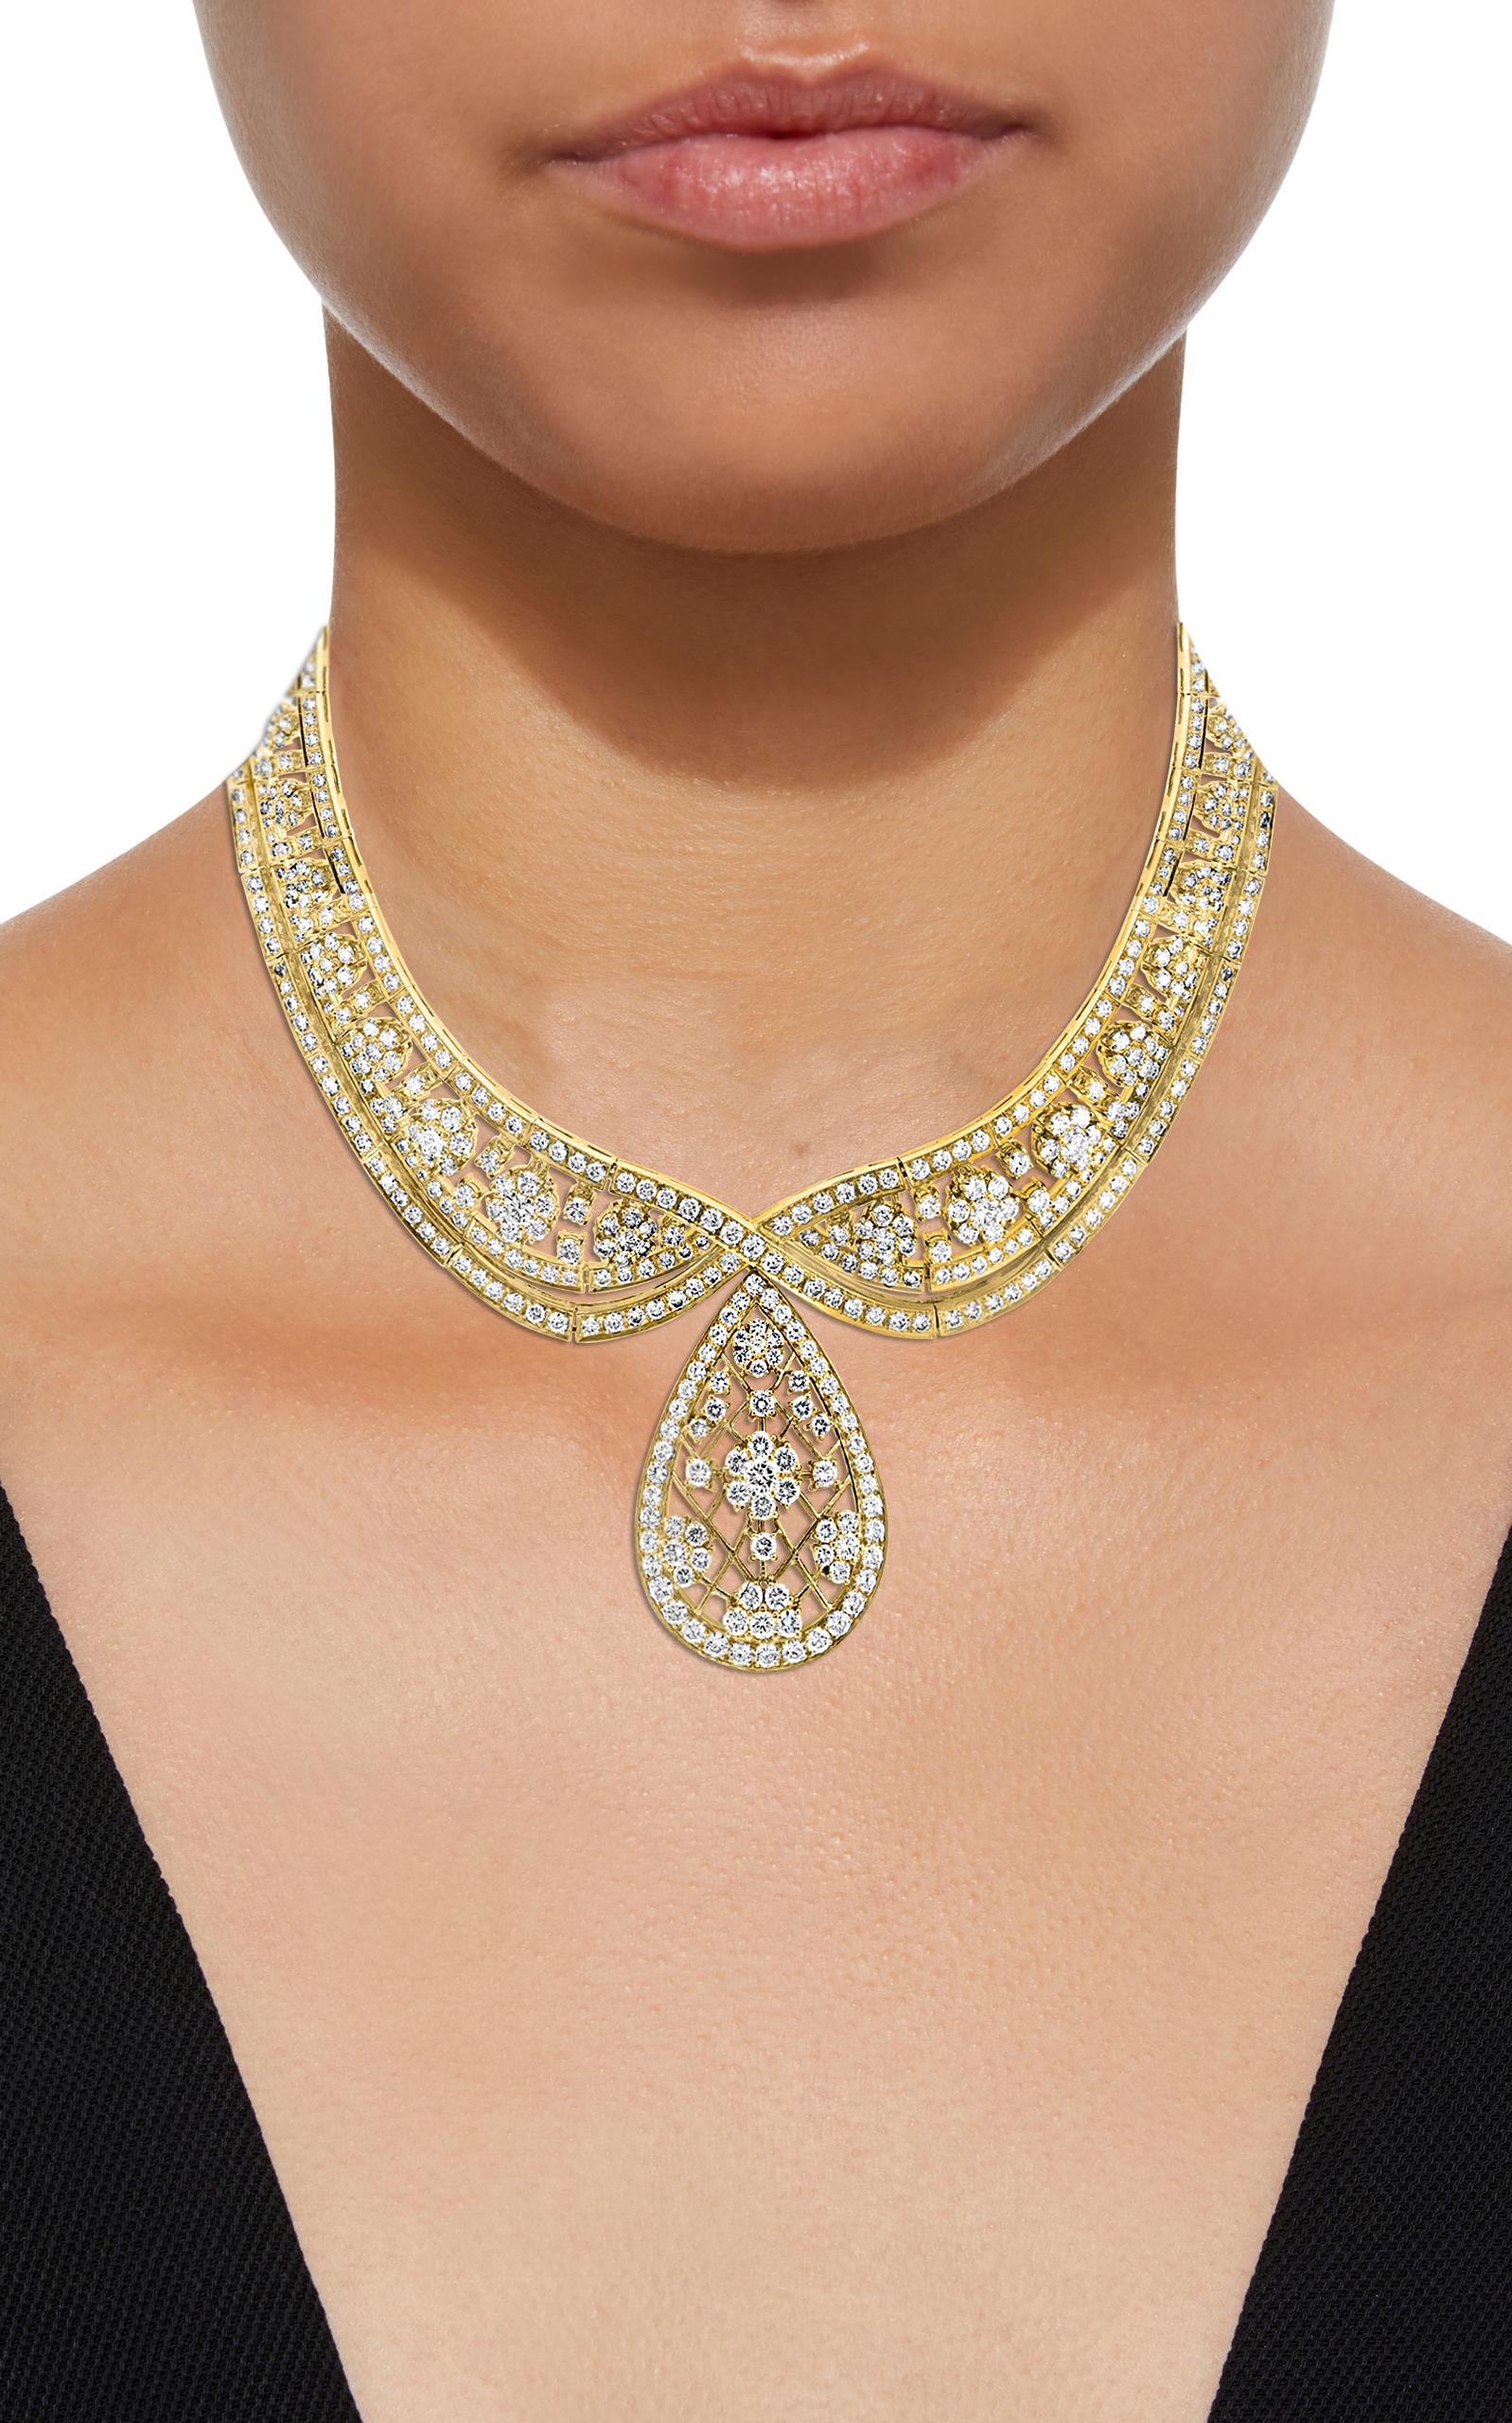 37 Carat Diamond Necklace and Earrings 185 Grams 18 Karat Gold Bridal Suite 2